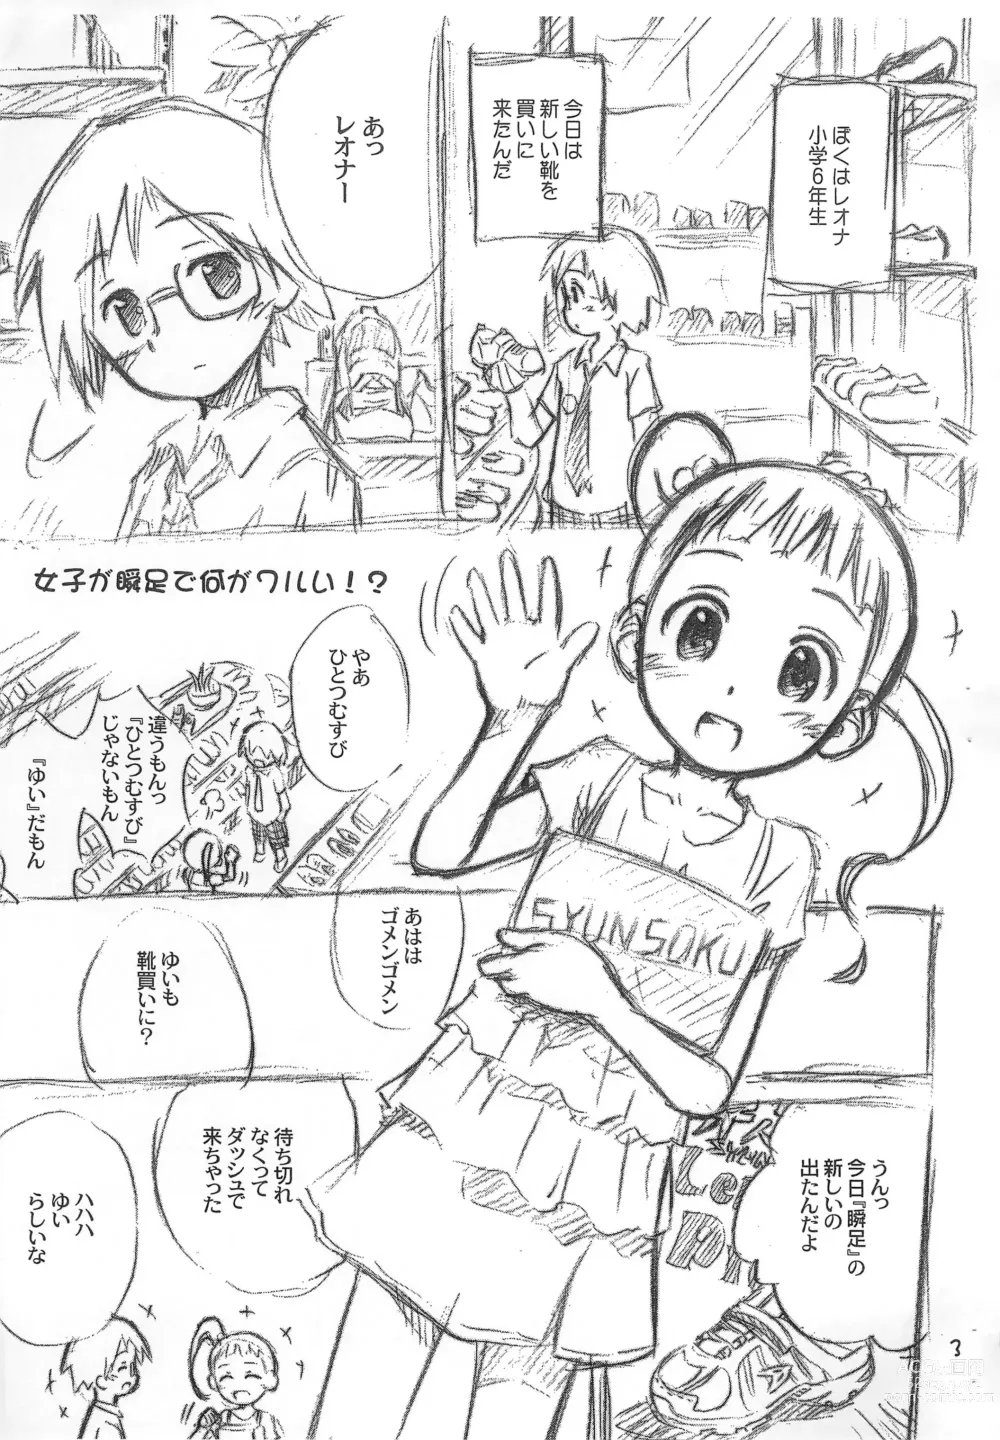 Page 3 of doujinshi Joshi ga Shunsoku de Nani ga Warui!?